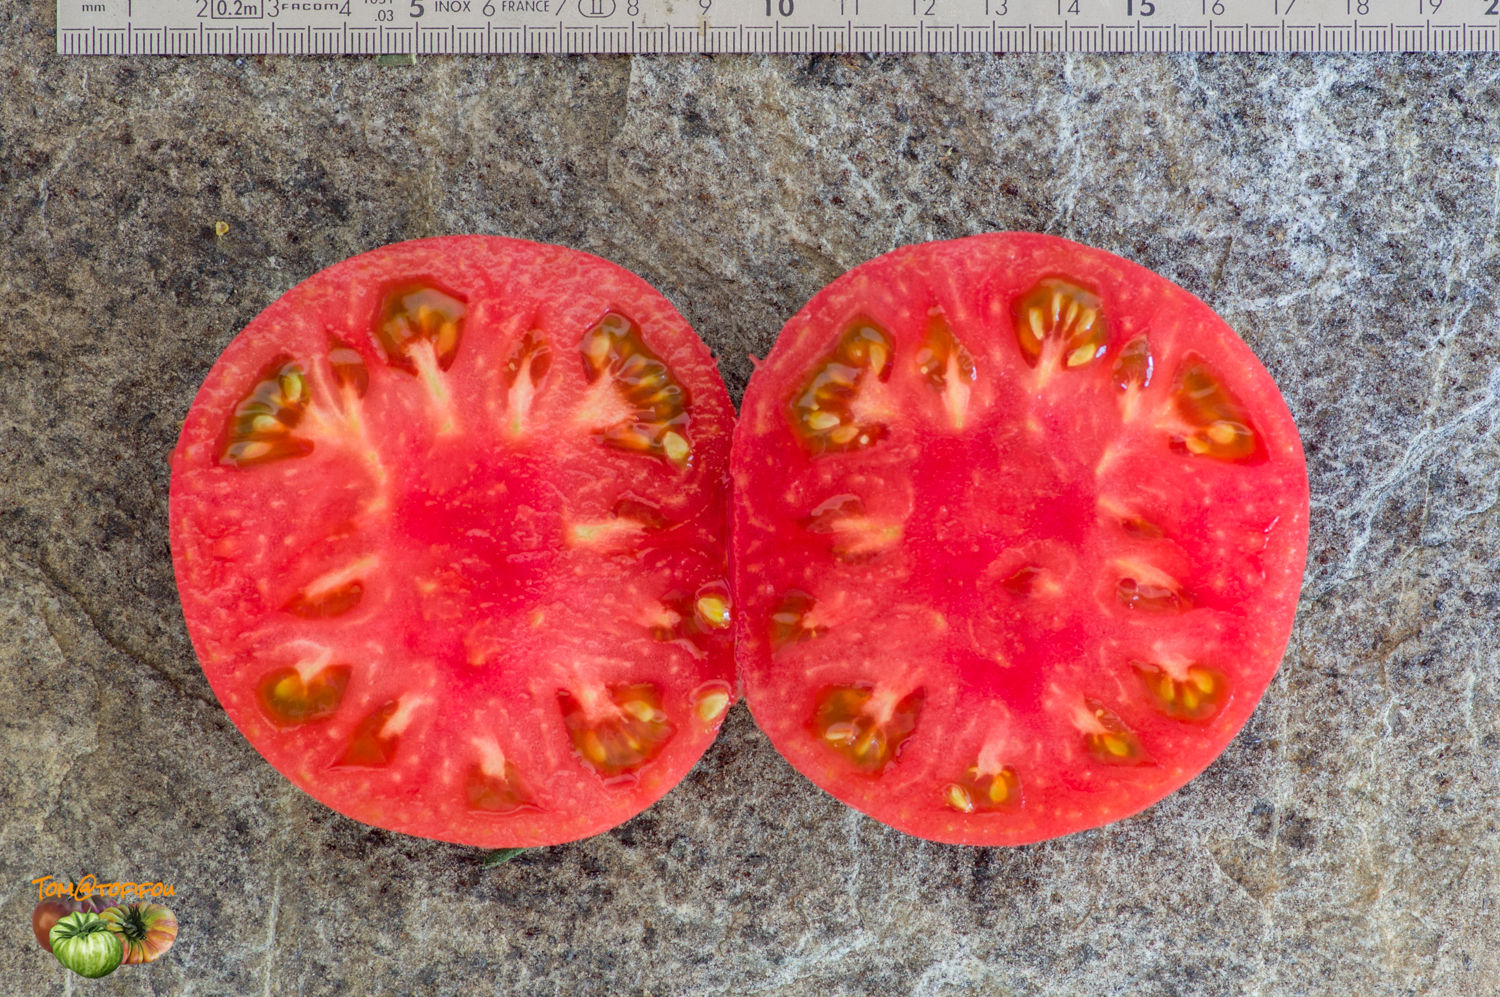 Brandywine, Sudduth Strain - Tomato